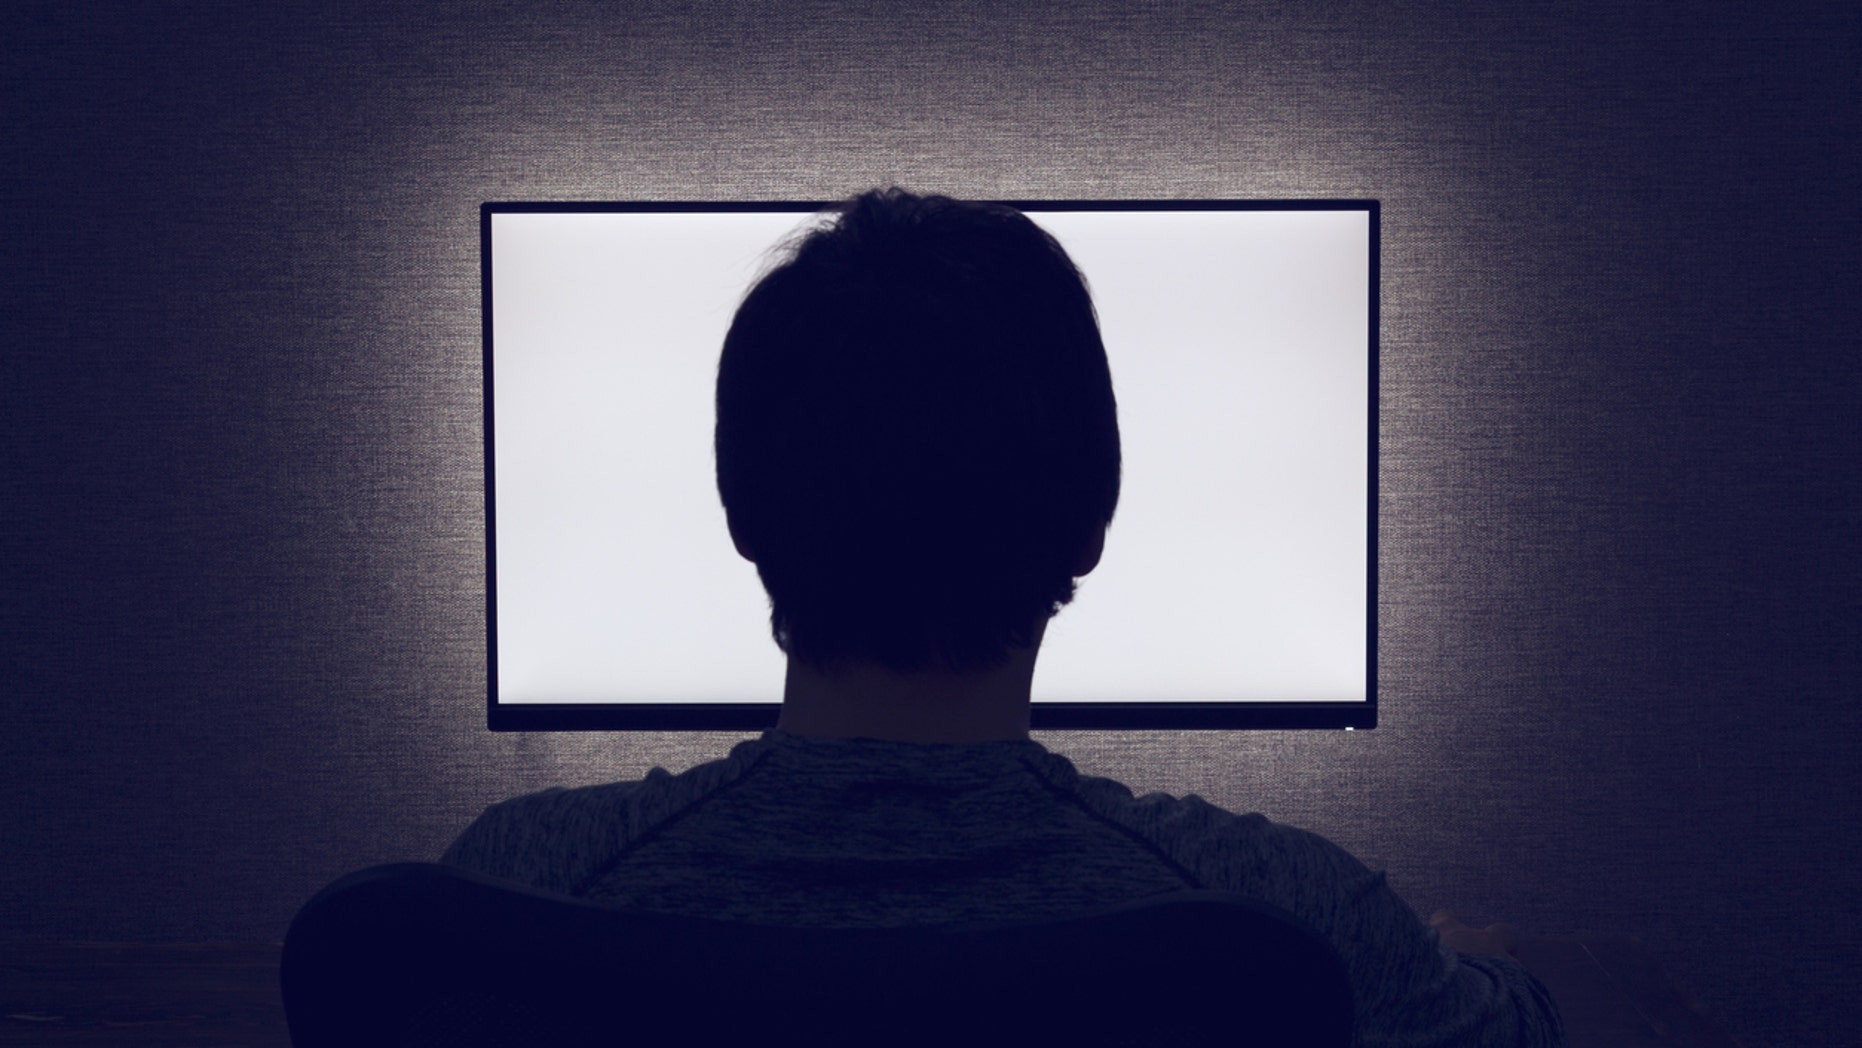 Watching Women Watching Porn - Is pornography a public health threat? | Fox News